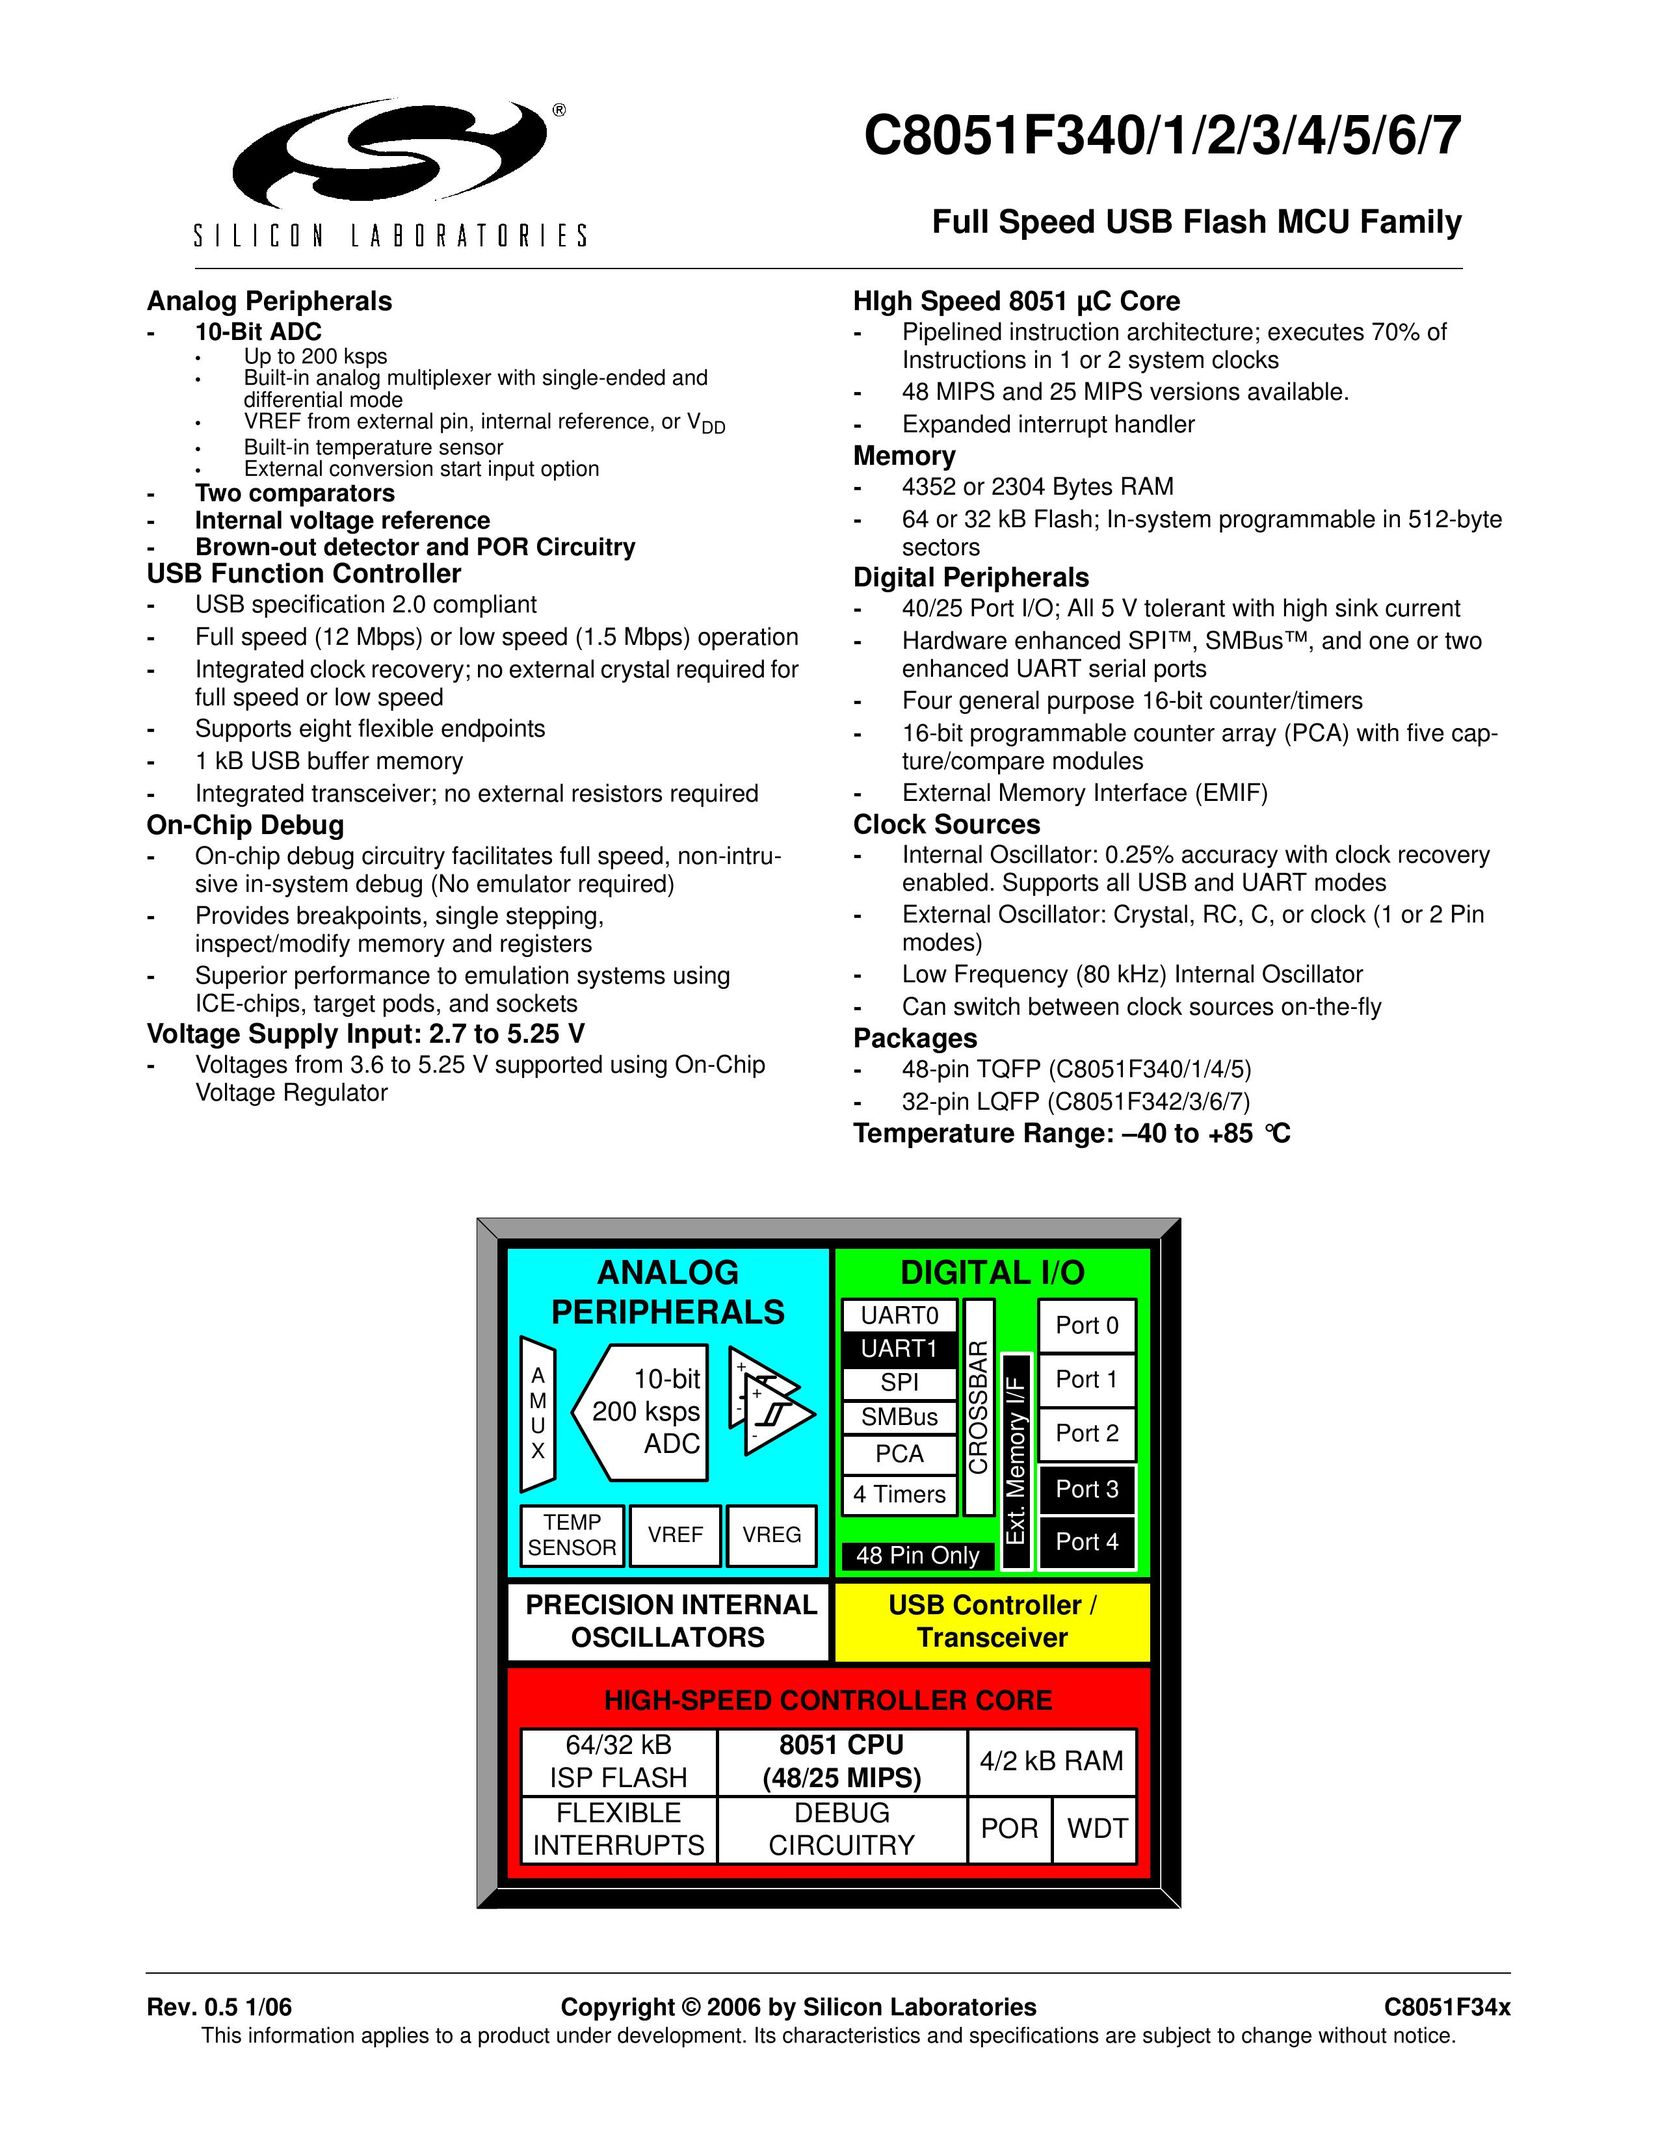 Silicon Laboratories C8051F347 Two-Way Radio User Manual